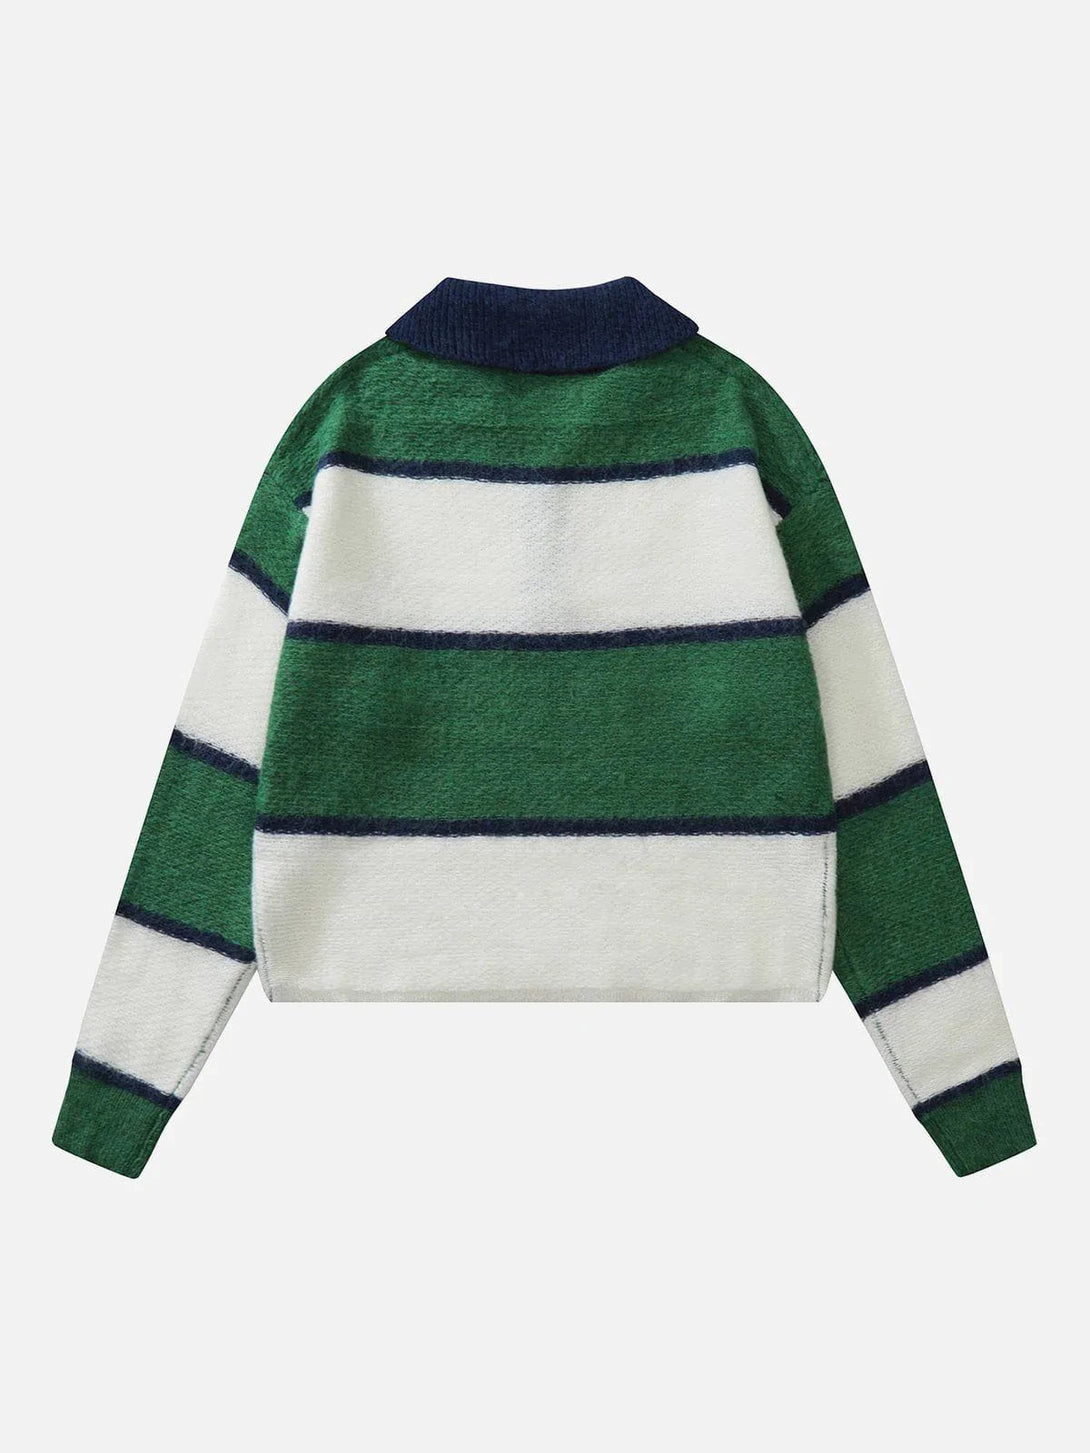 Majesda® - Stripe Polo Collar Sweater outfit ideas streetwear fashion